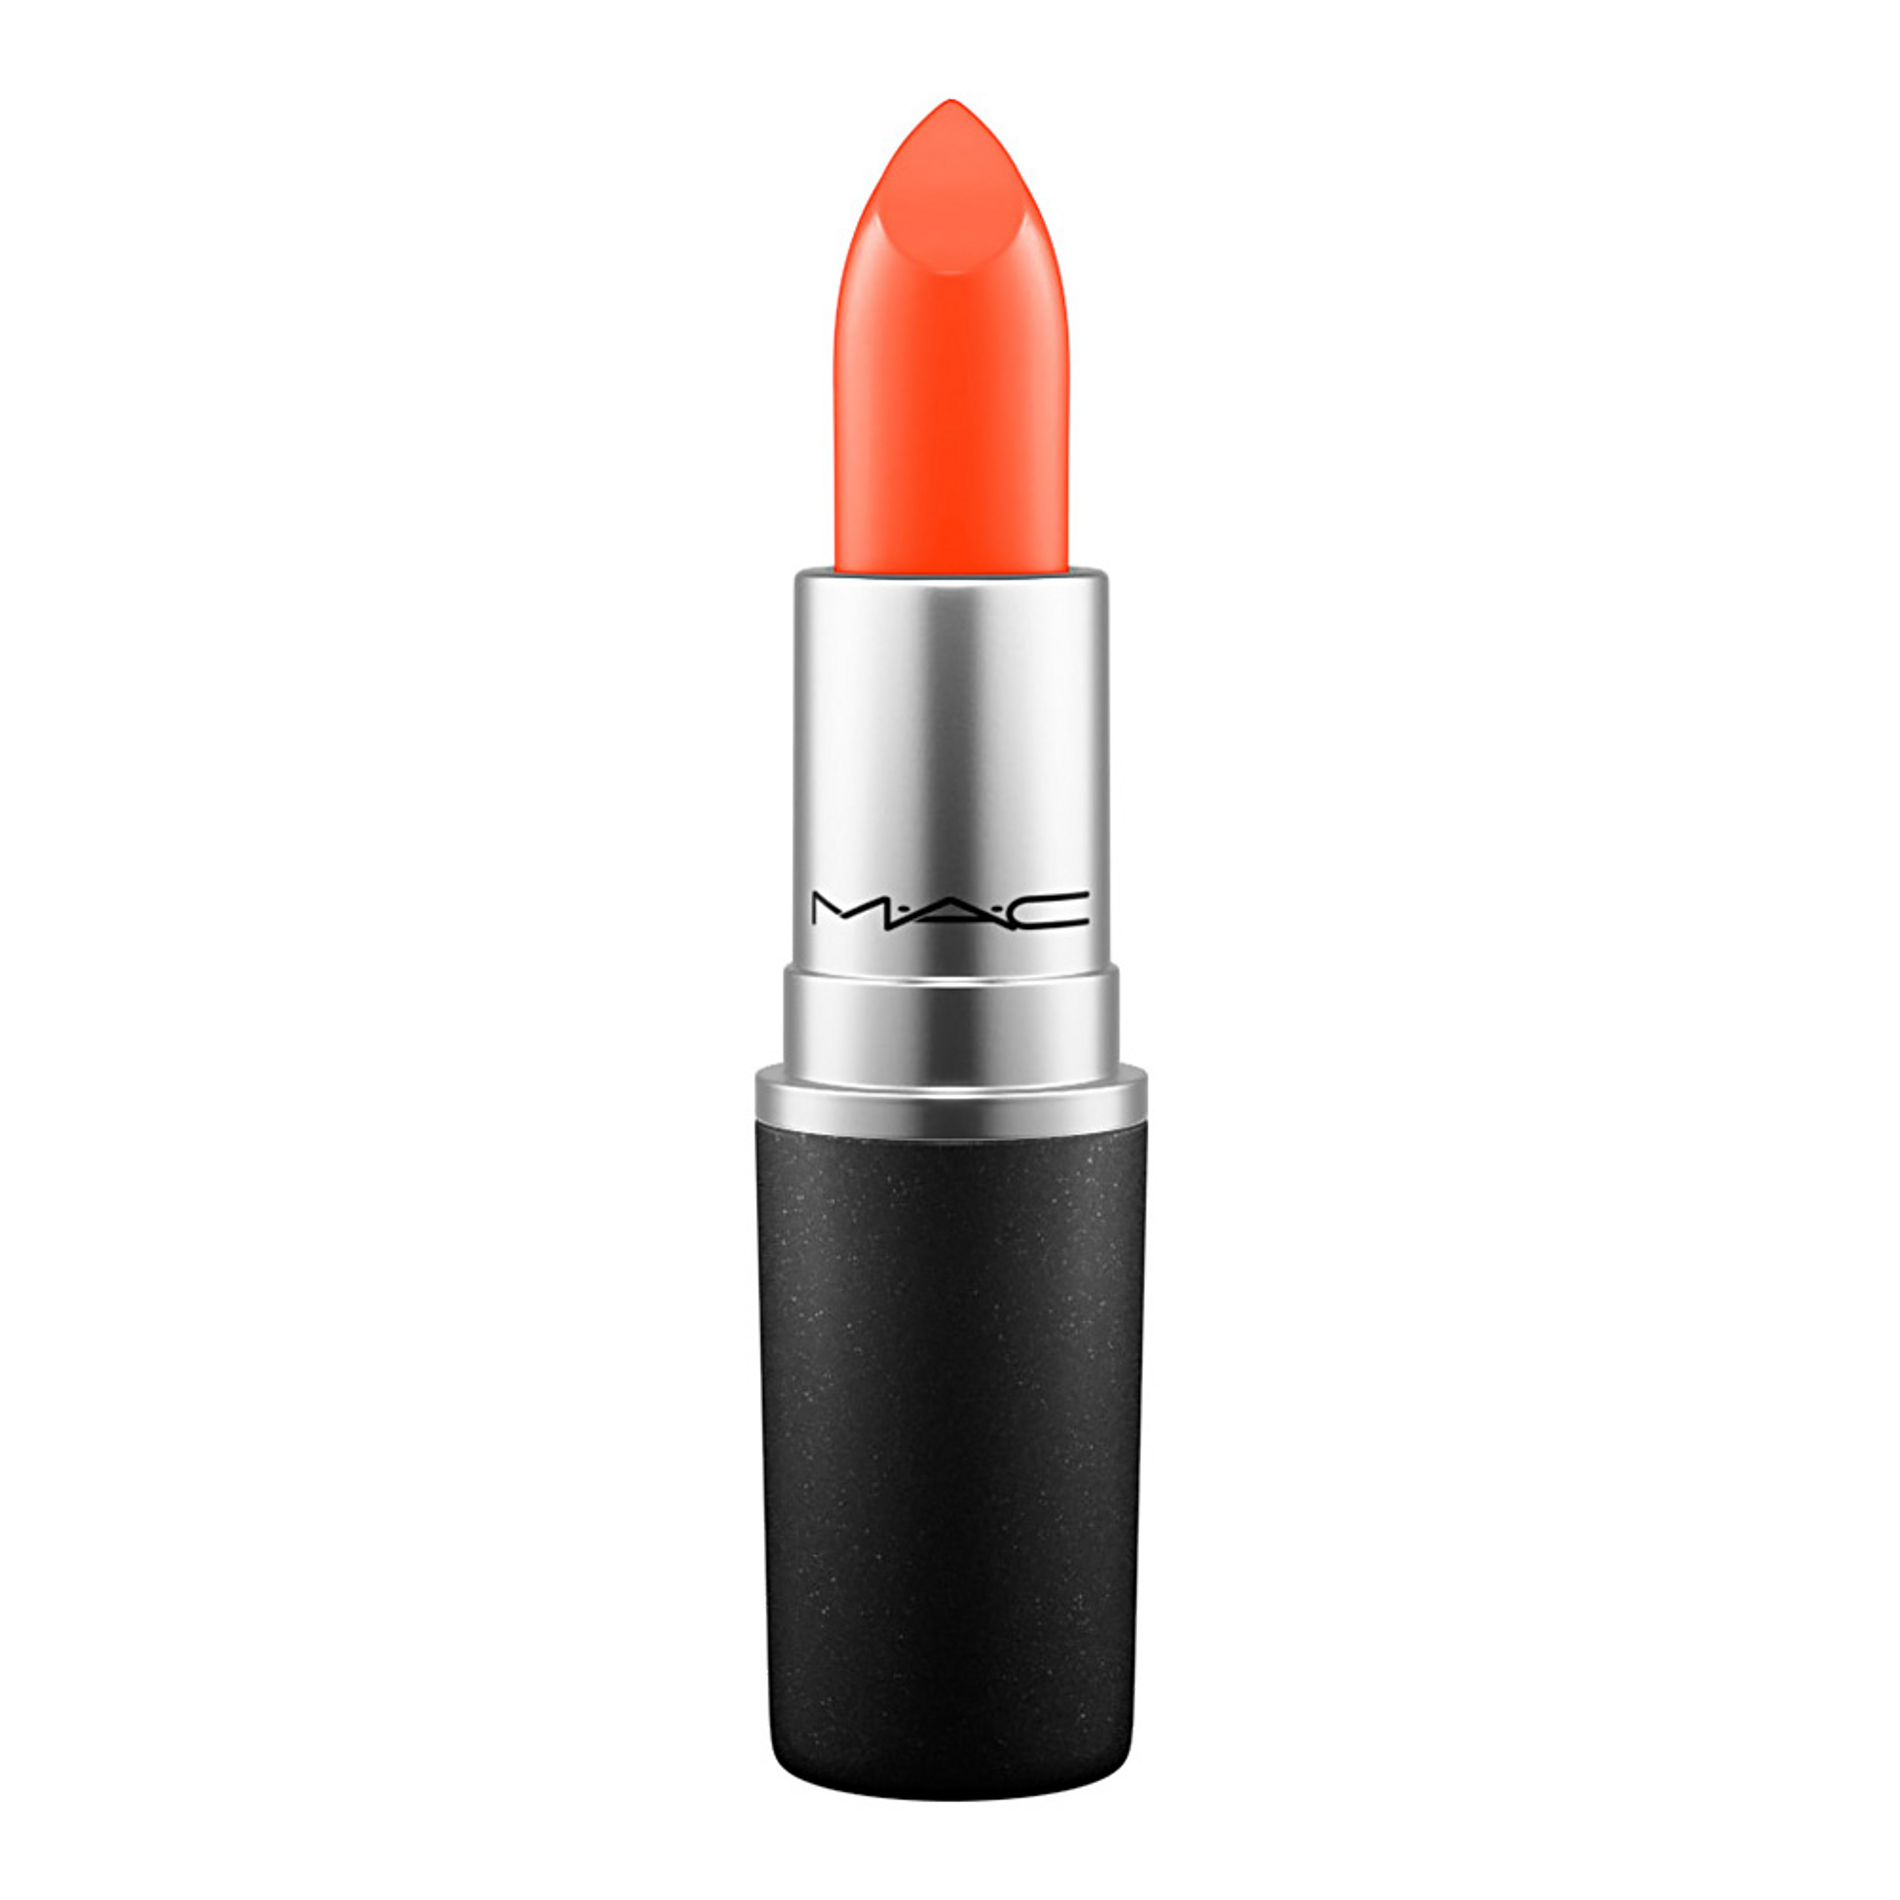 son-thoi-mac-amplified-creme-lipstick-3g-7